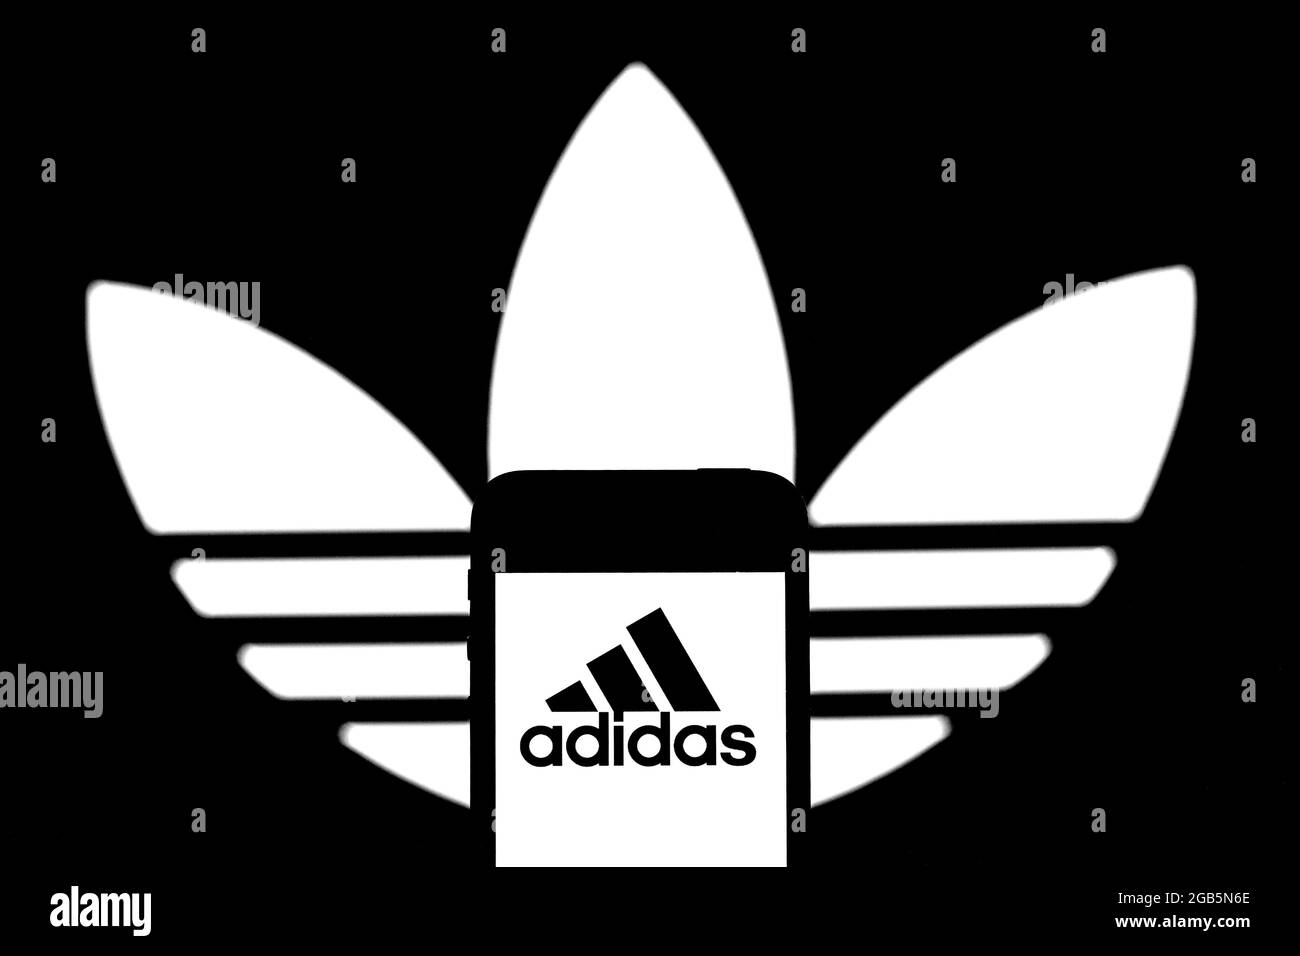 Adidas logo Black and White Stock Photos & Images - Alamy